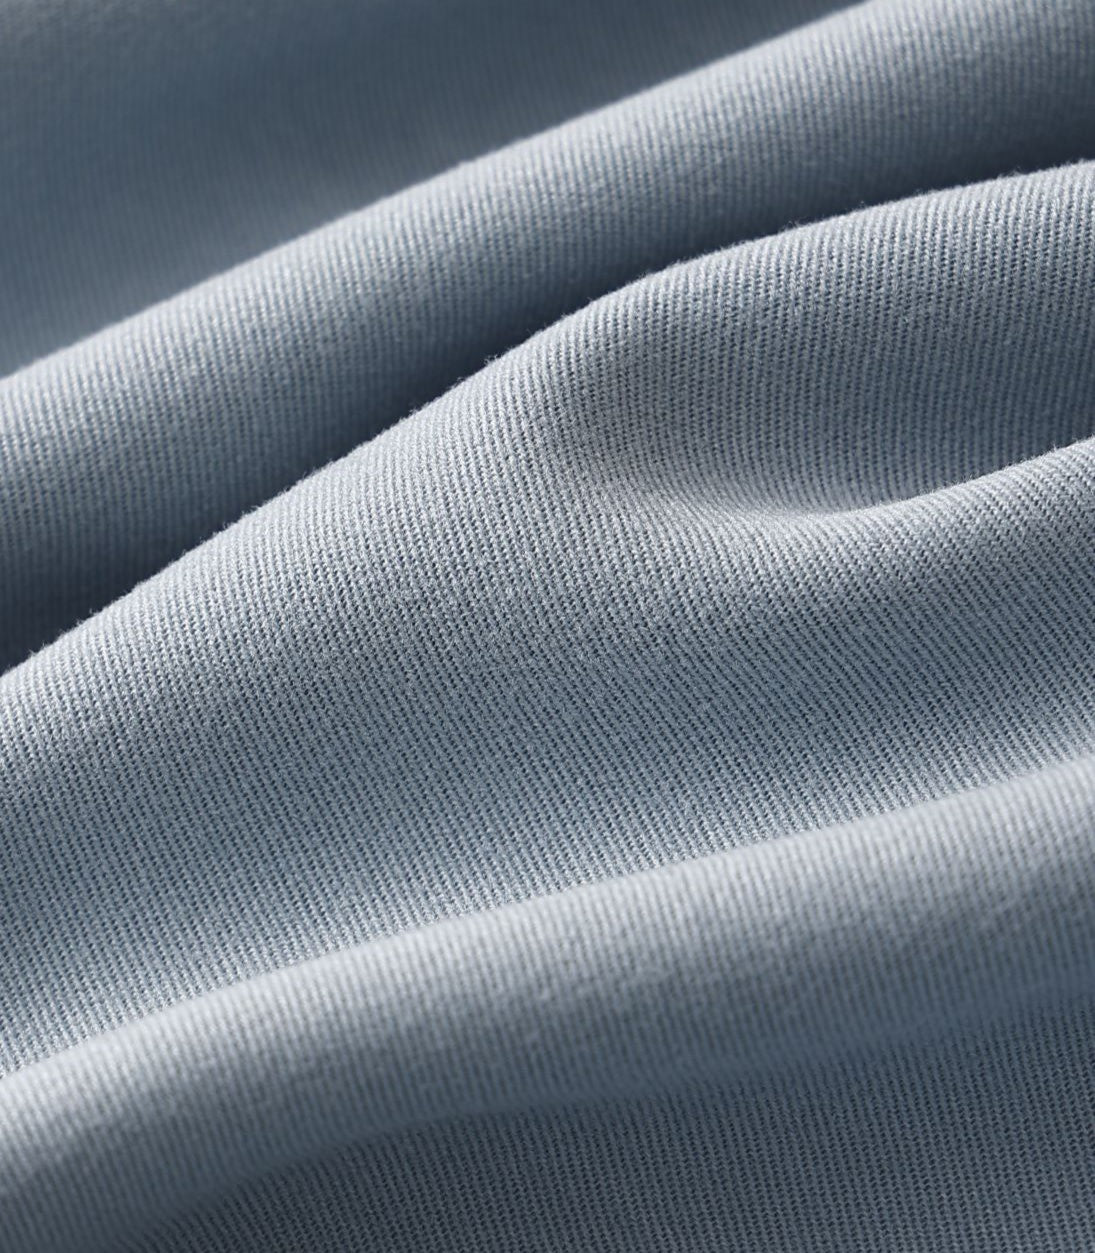 Spa Robes Microfiber Twill Fabric Exterior